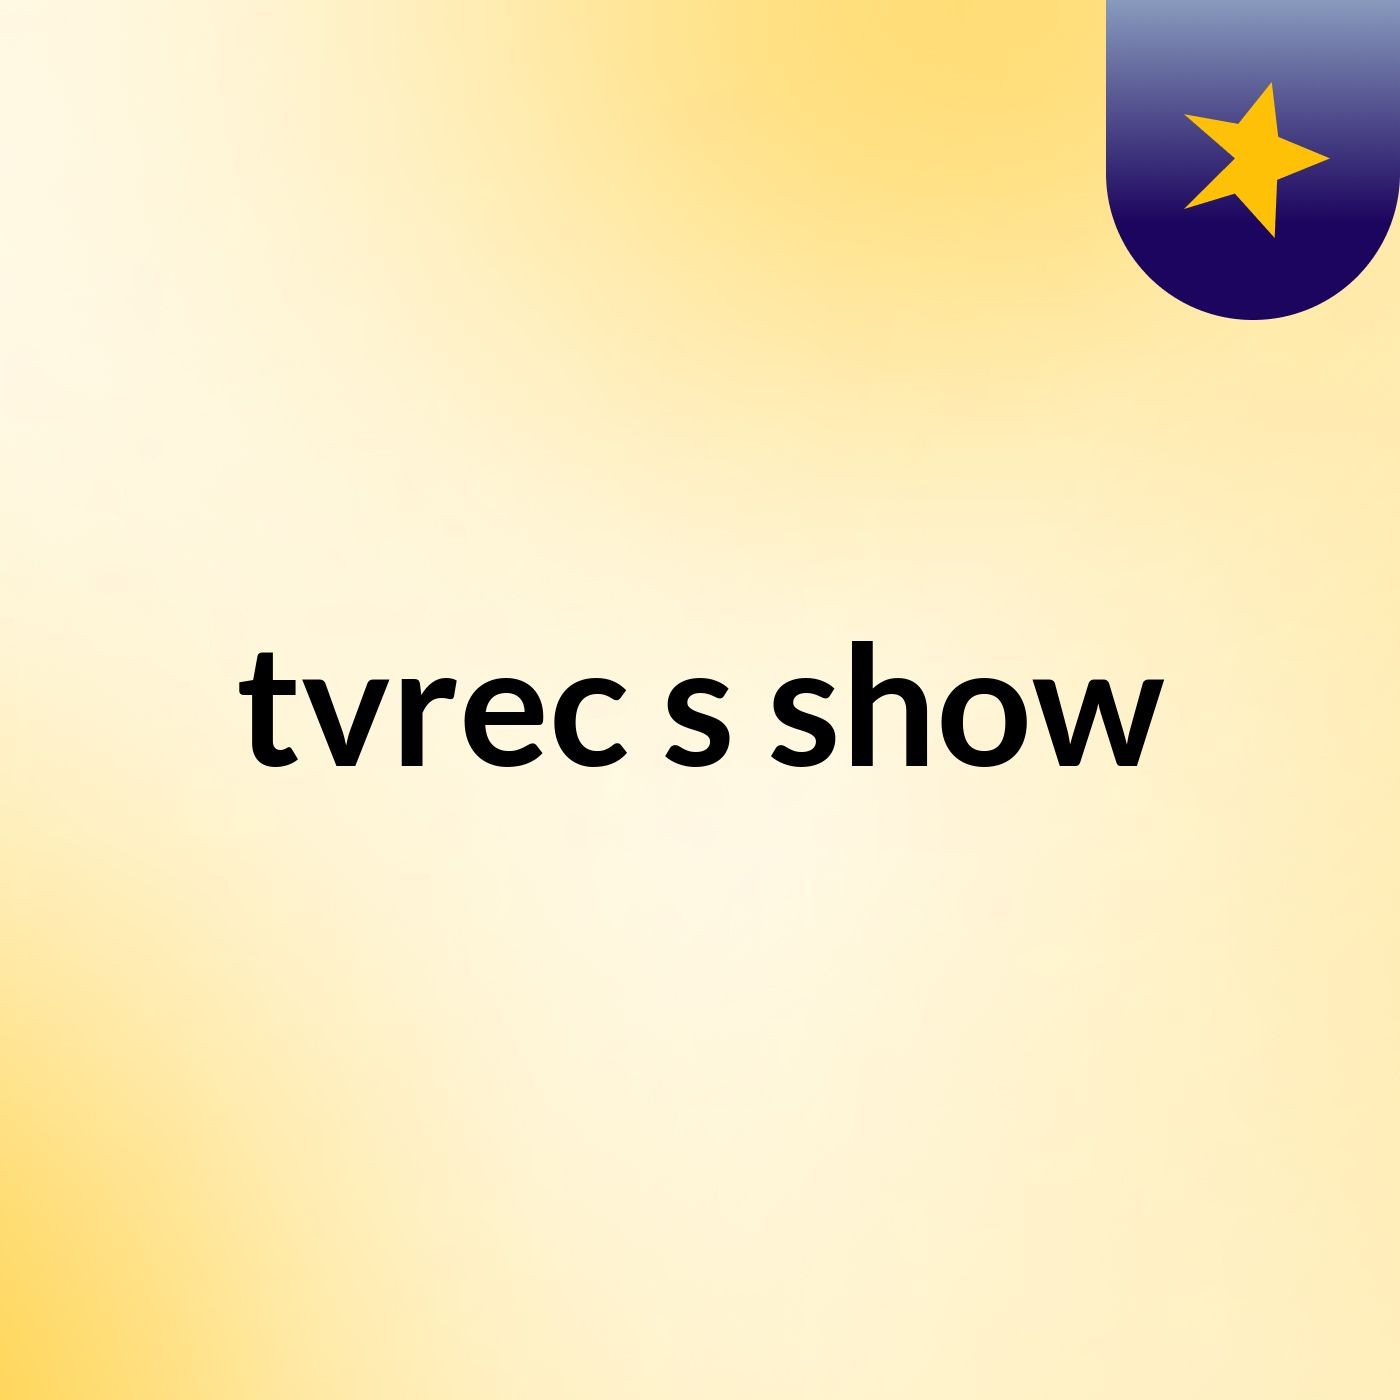 tvrec's show